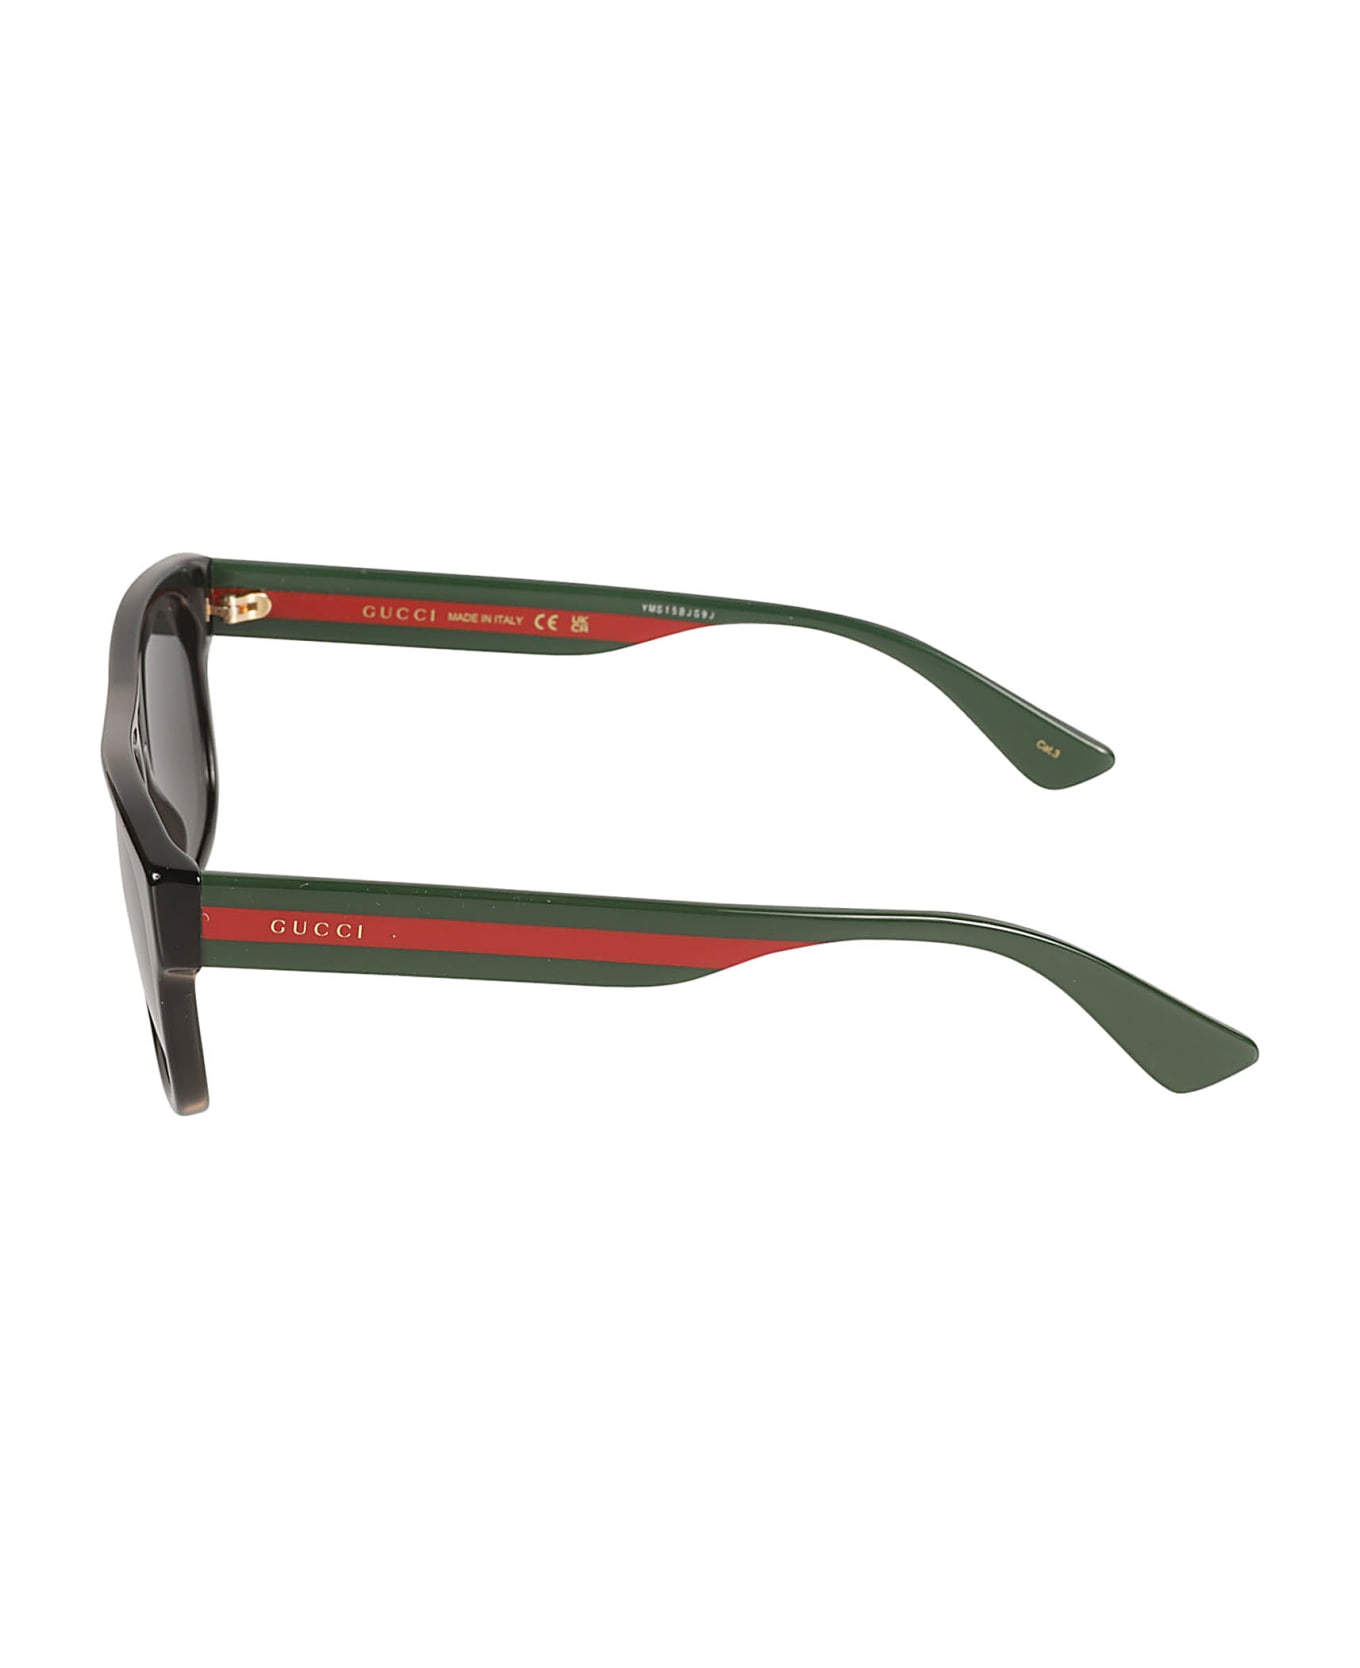 Gucci Eyewear Geometric Classic Sunglasses - Black/Multicolor